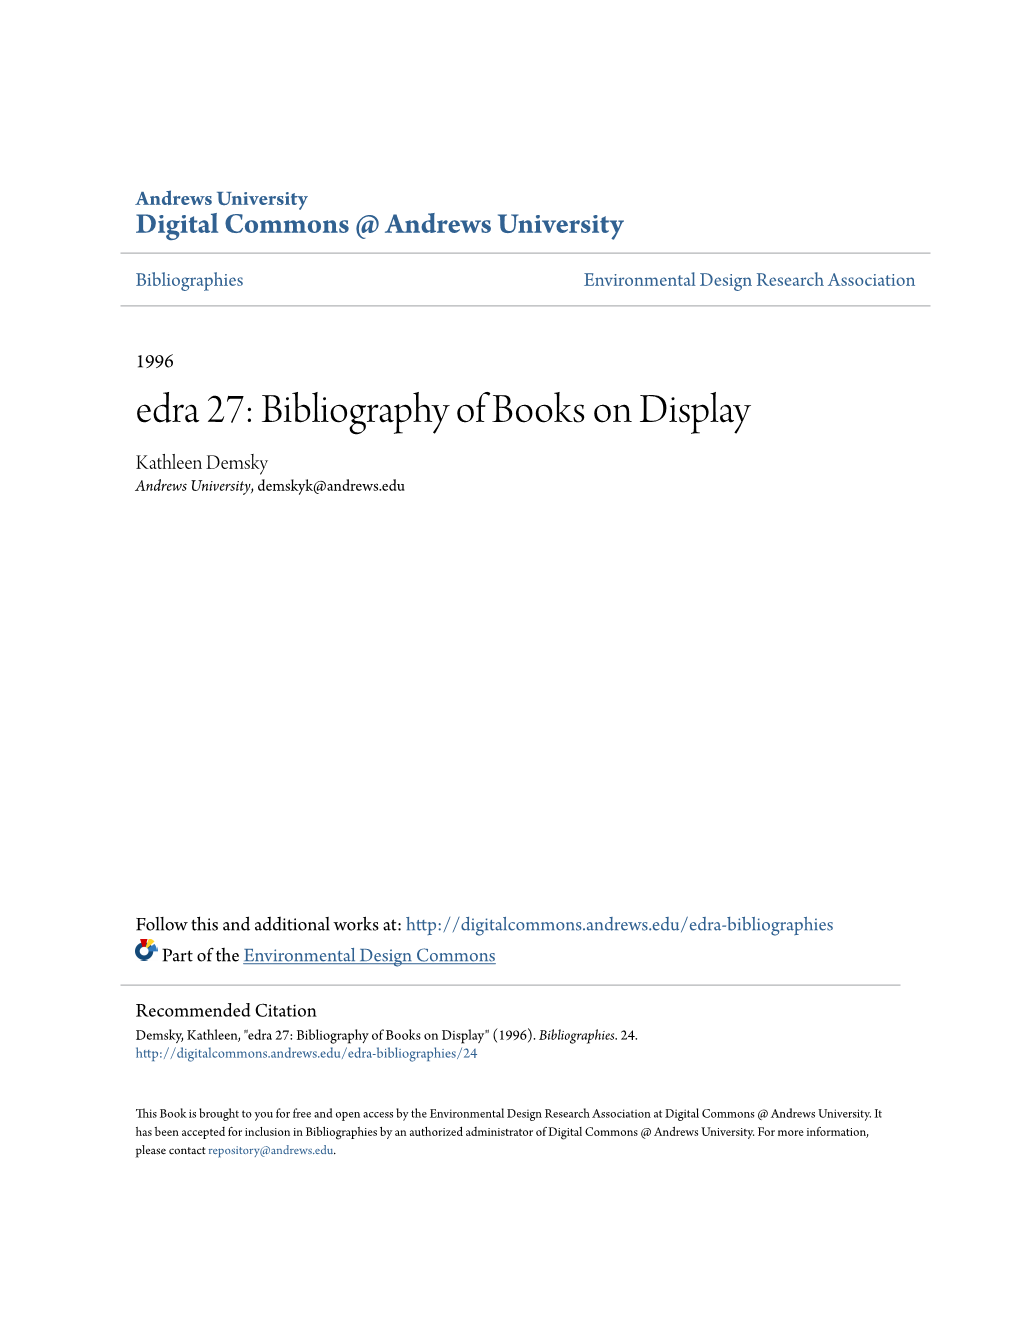 Edra 27: Bibliography of Books on Display Kathleen Demsky Andrews University, Demskyk@Andrews.Edu